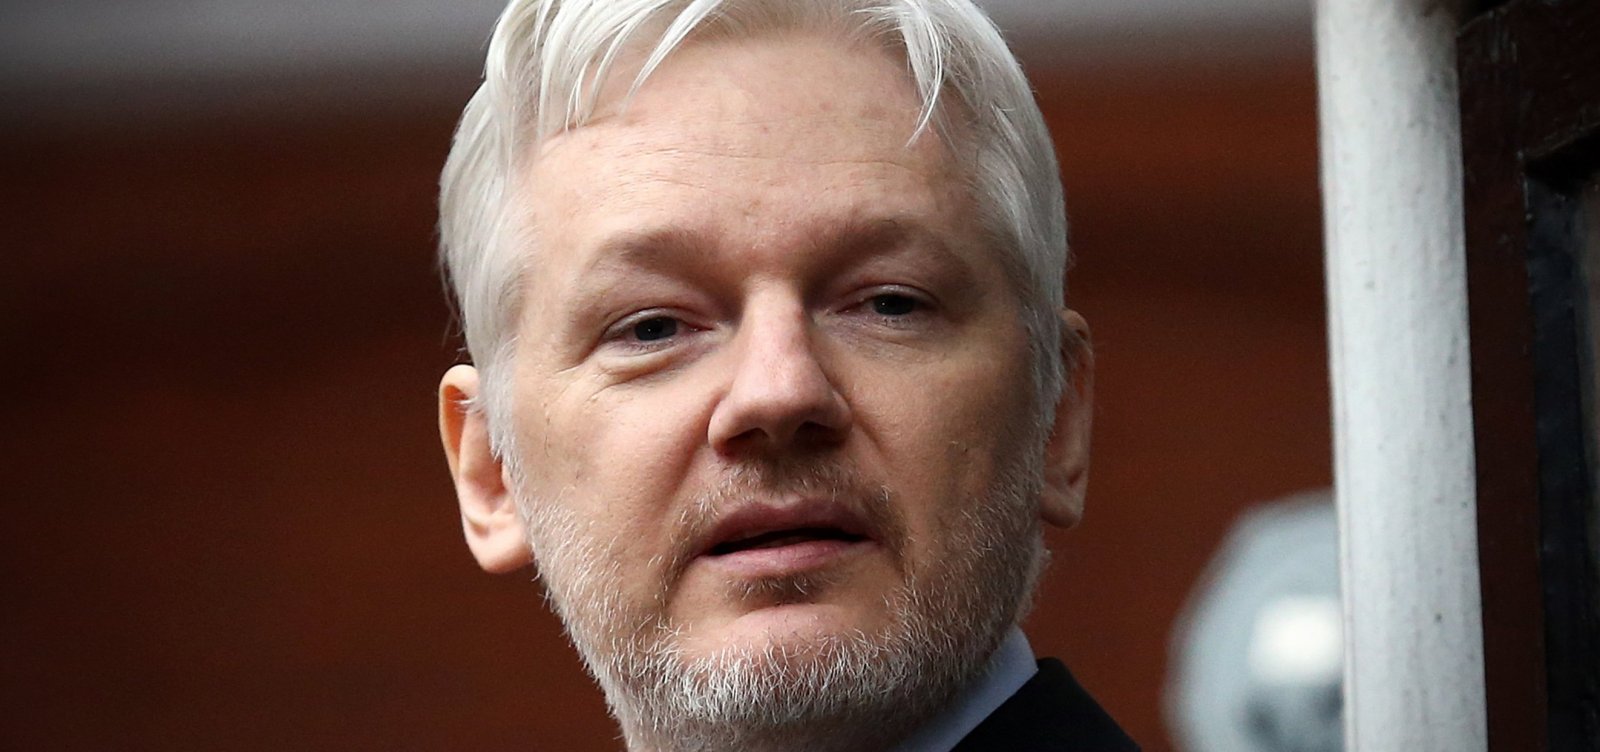 Promotores americanos indiciaram Julian Assange em segredo 